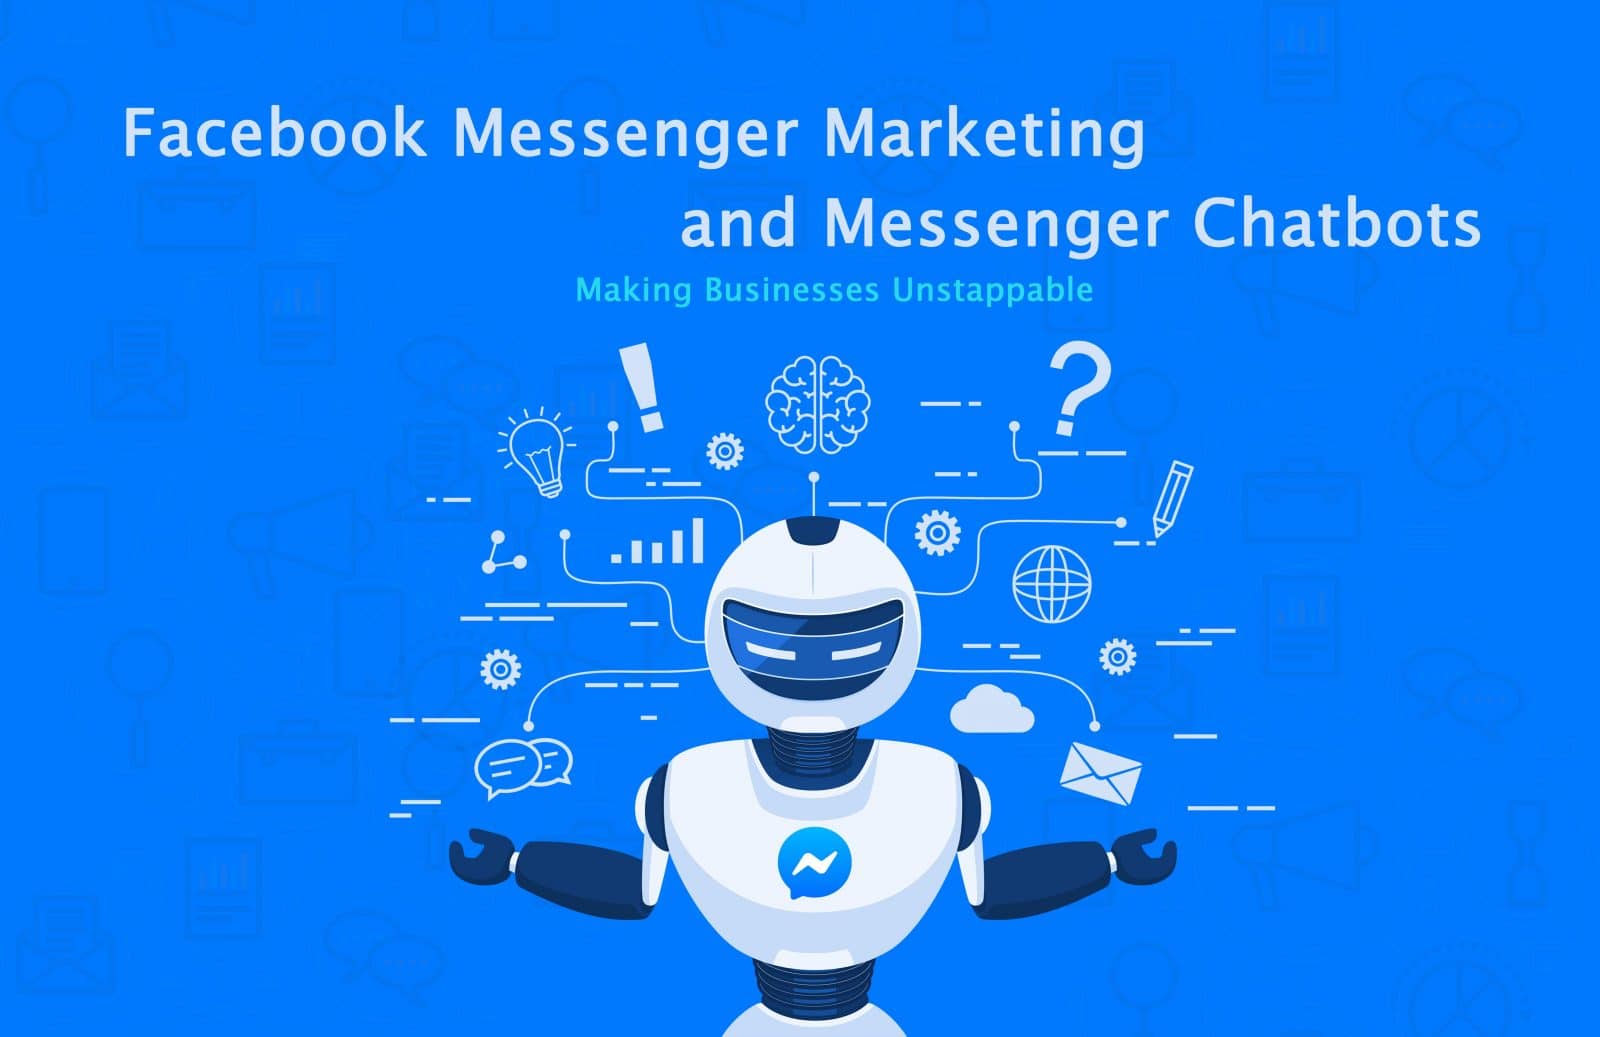 messenger marketing